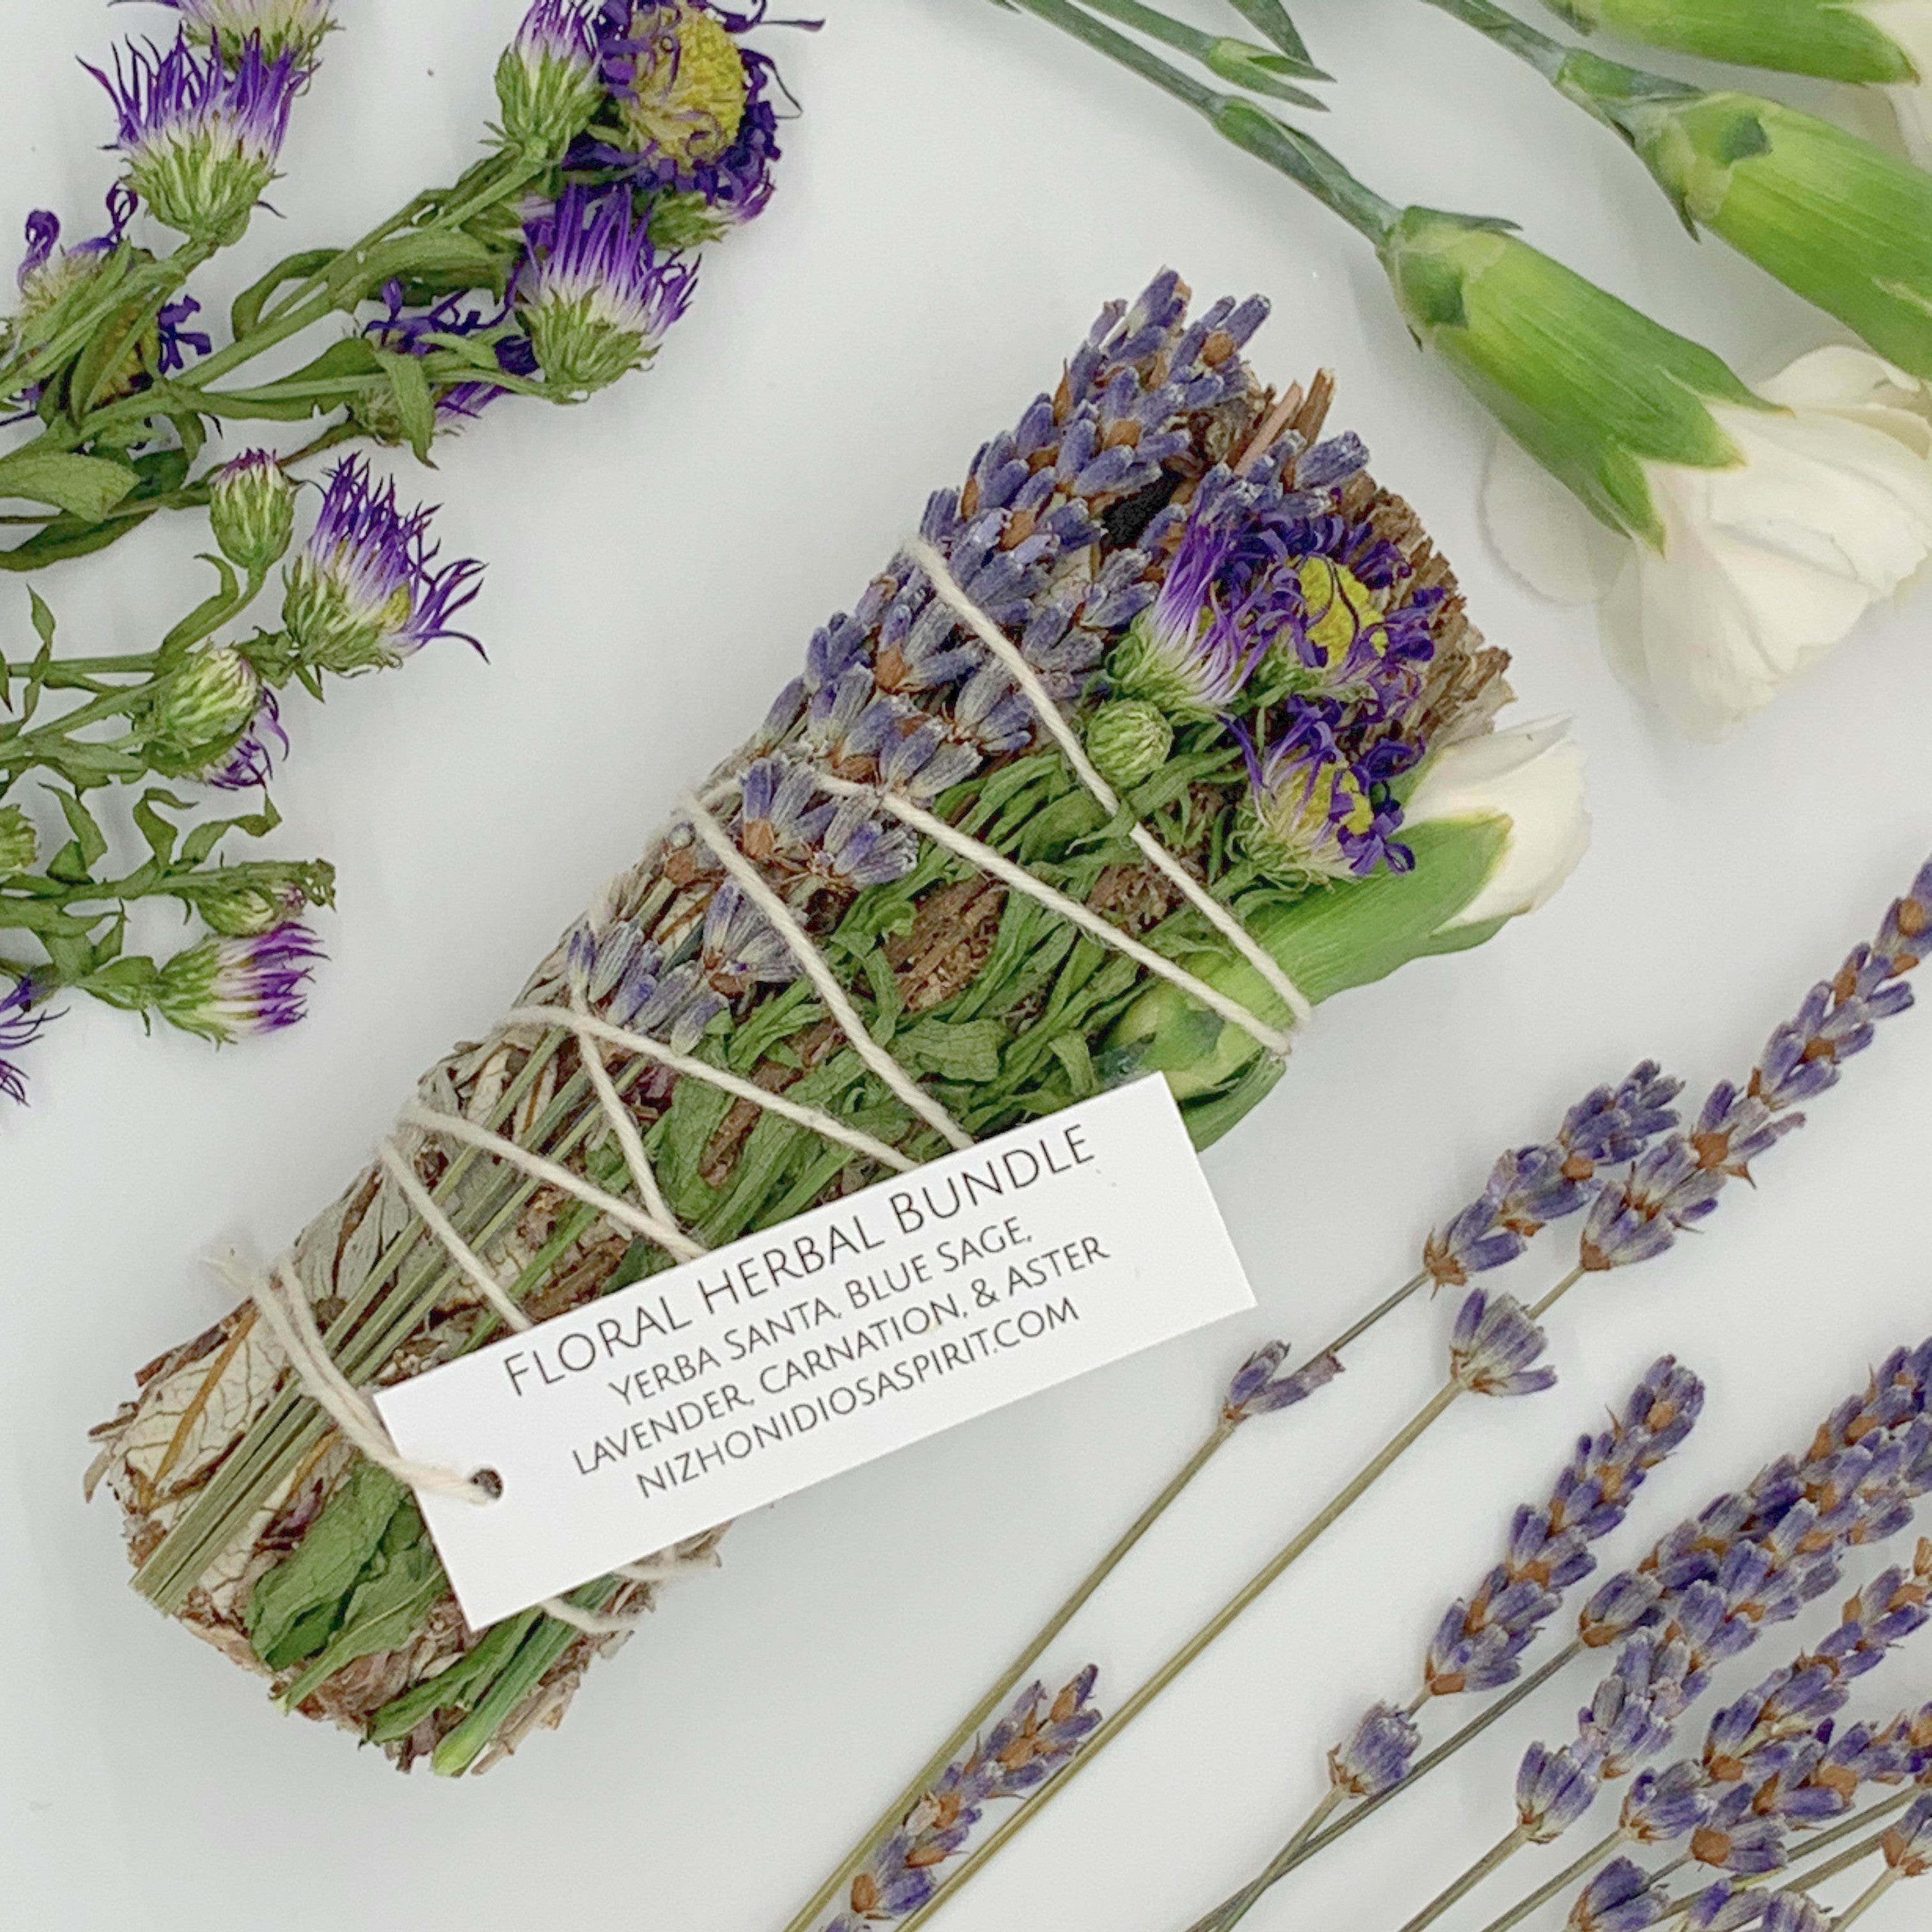 Floral Herbal Bundle – Nizhoni Diosa Spirit